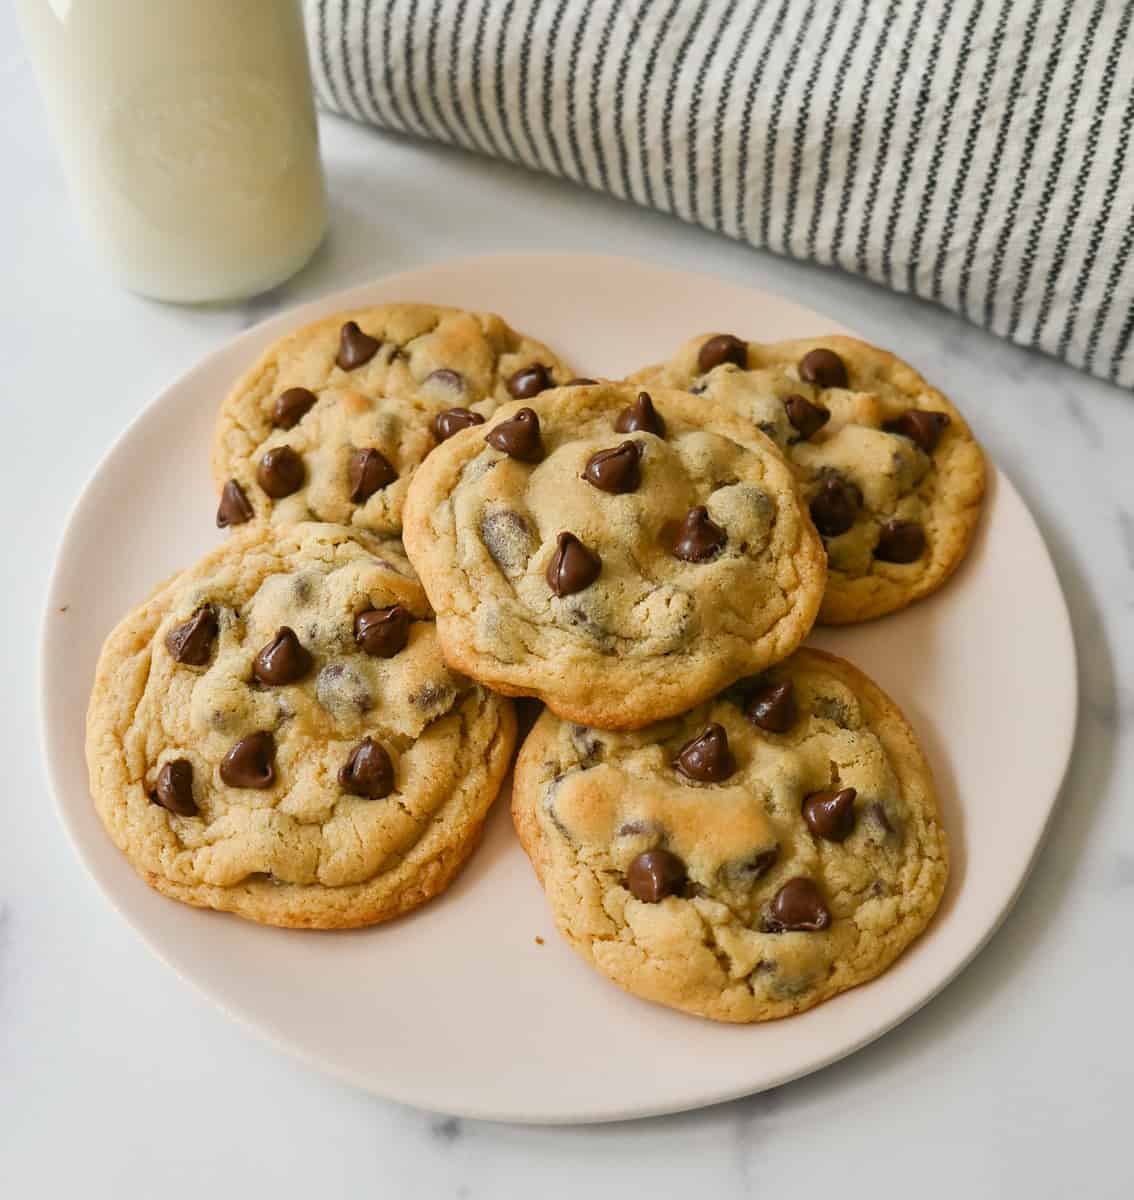 Nestle Toll House Chocolate Chip Cookies Recipe – Modern Honey